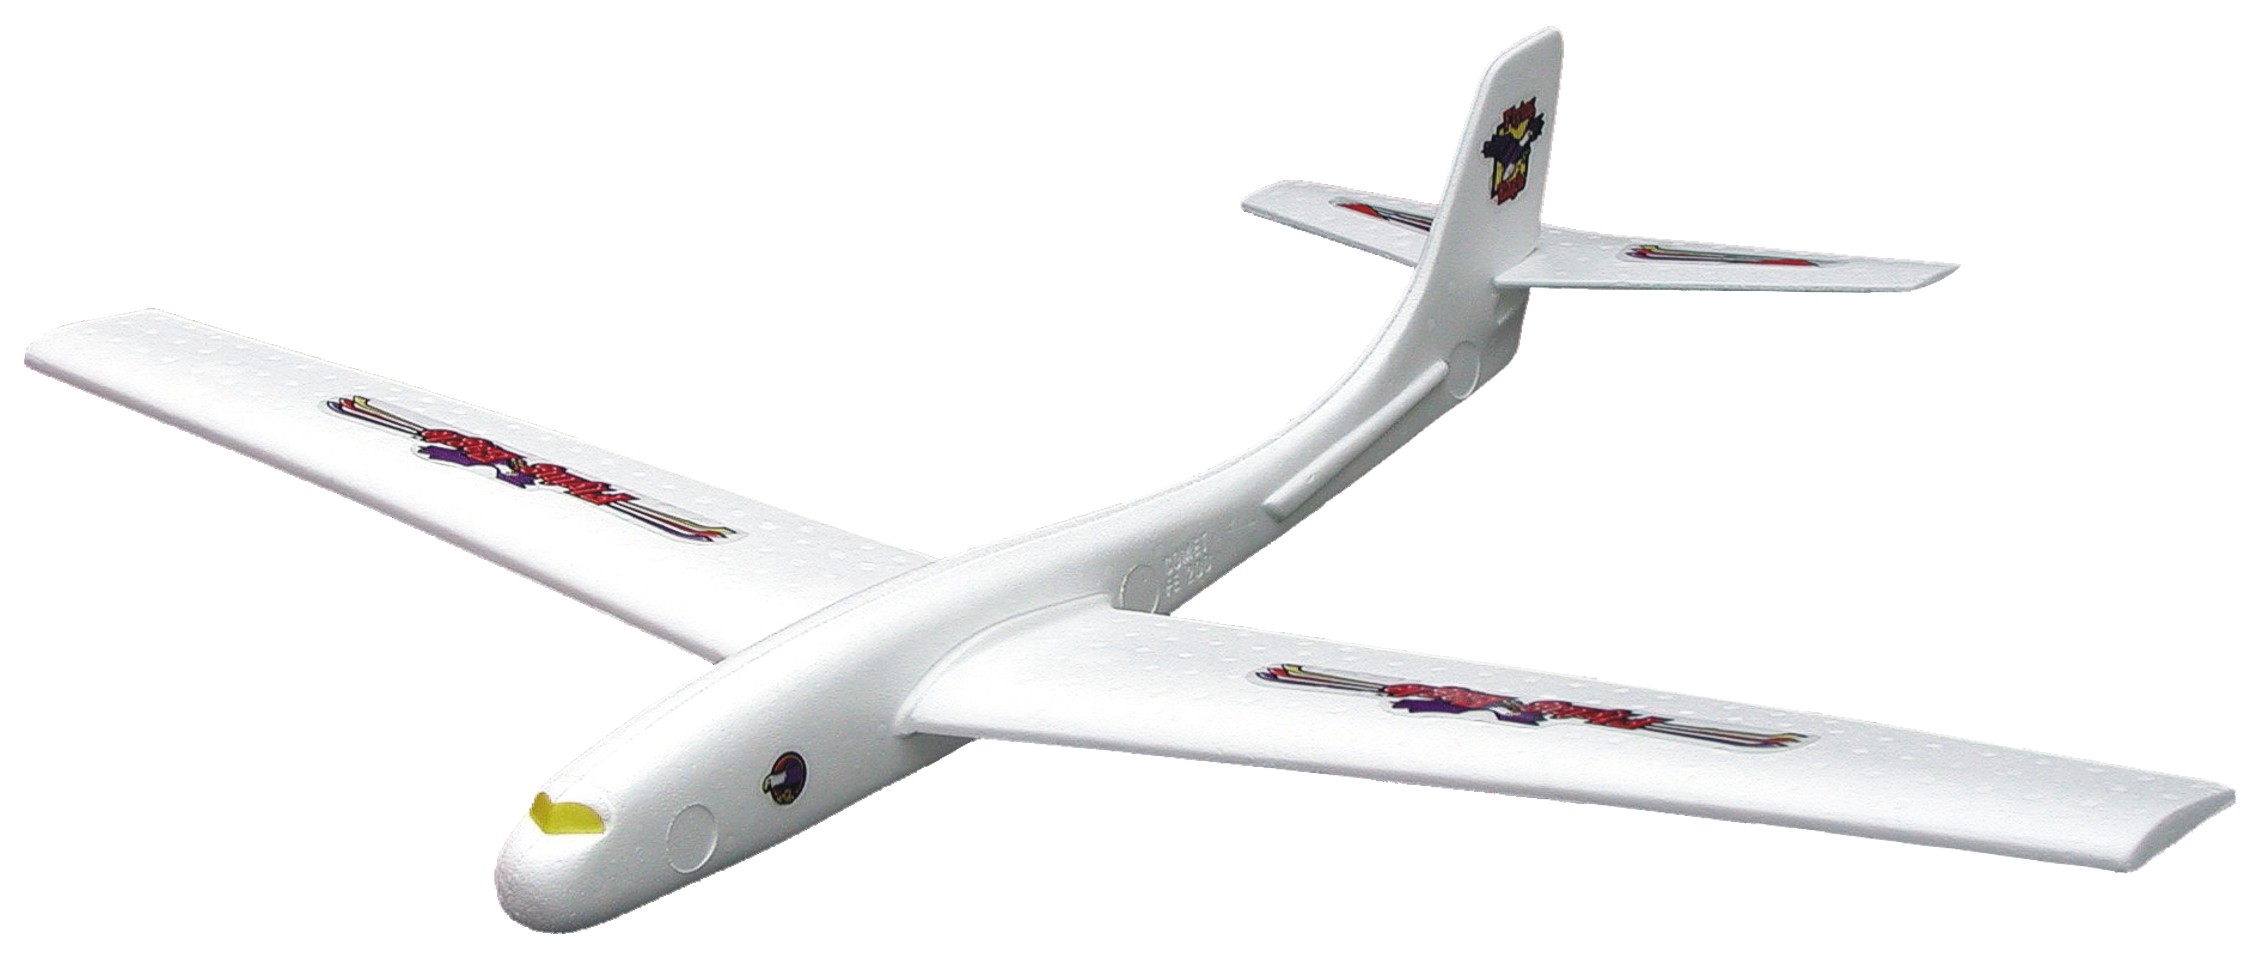 Guillow's Space Shuttle Foam Glider Model Kit 